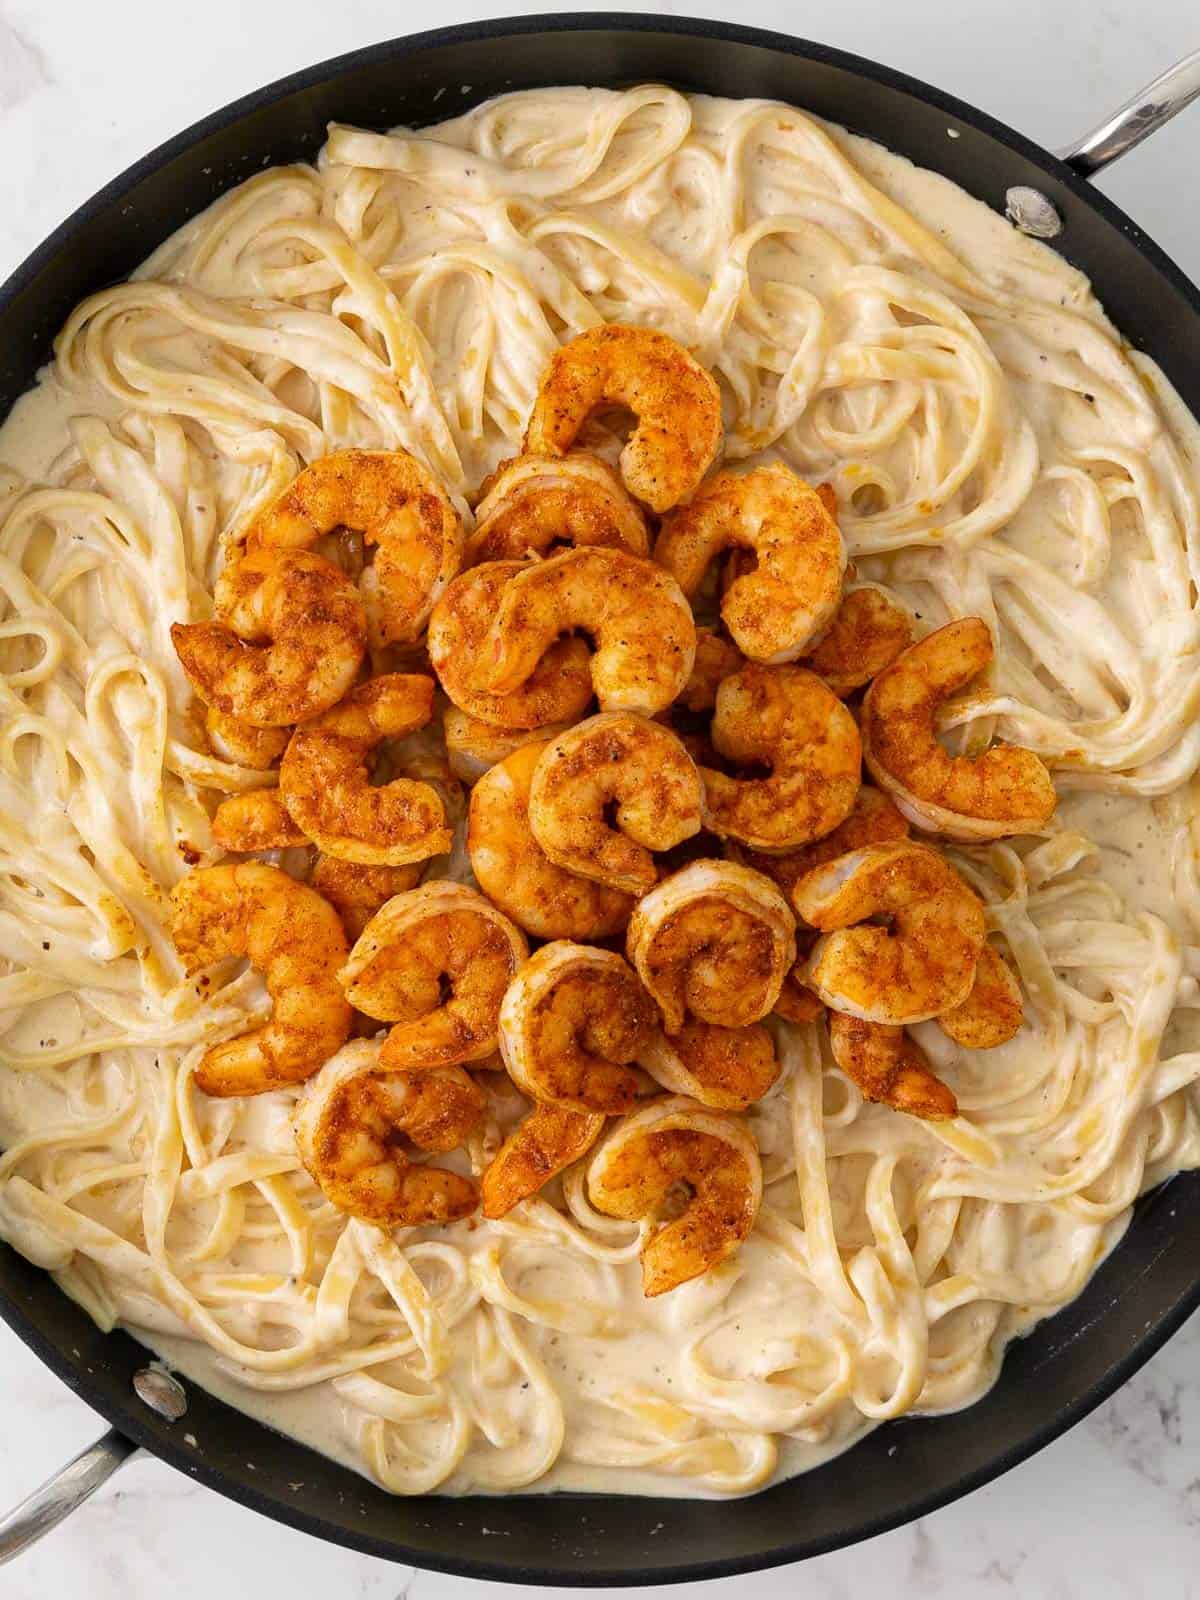 Fettuccini alfredo pasta topped with cajun shrimp in a skillet.